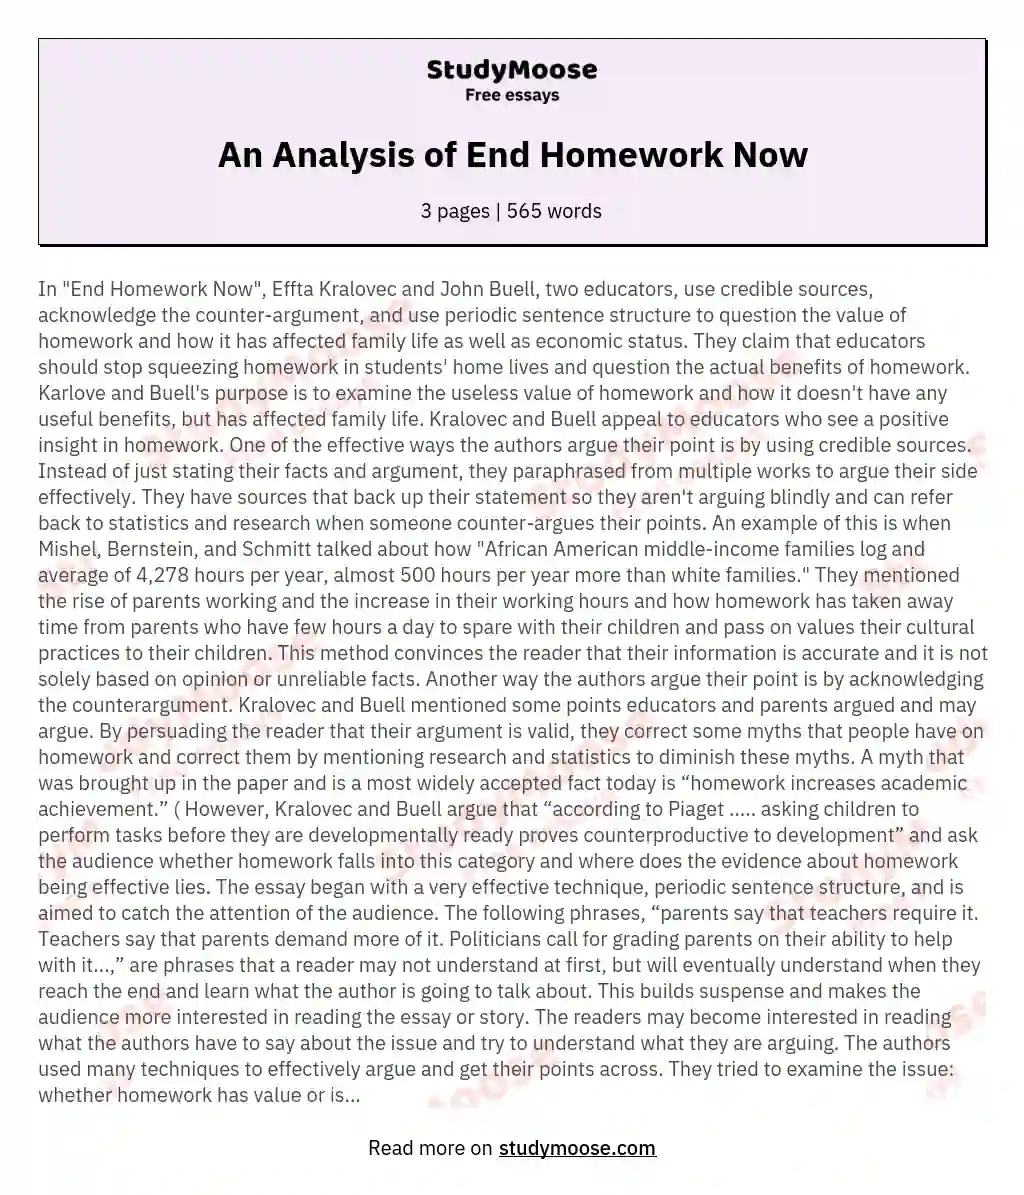 An Analysis of End Homework Now essay